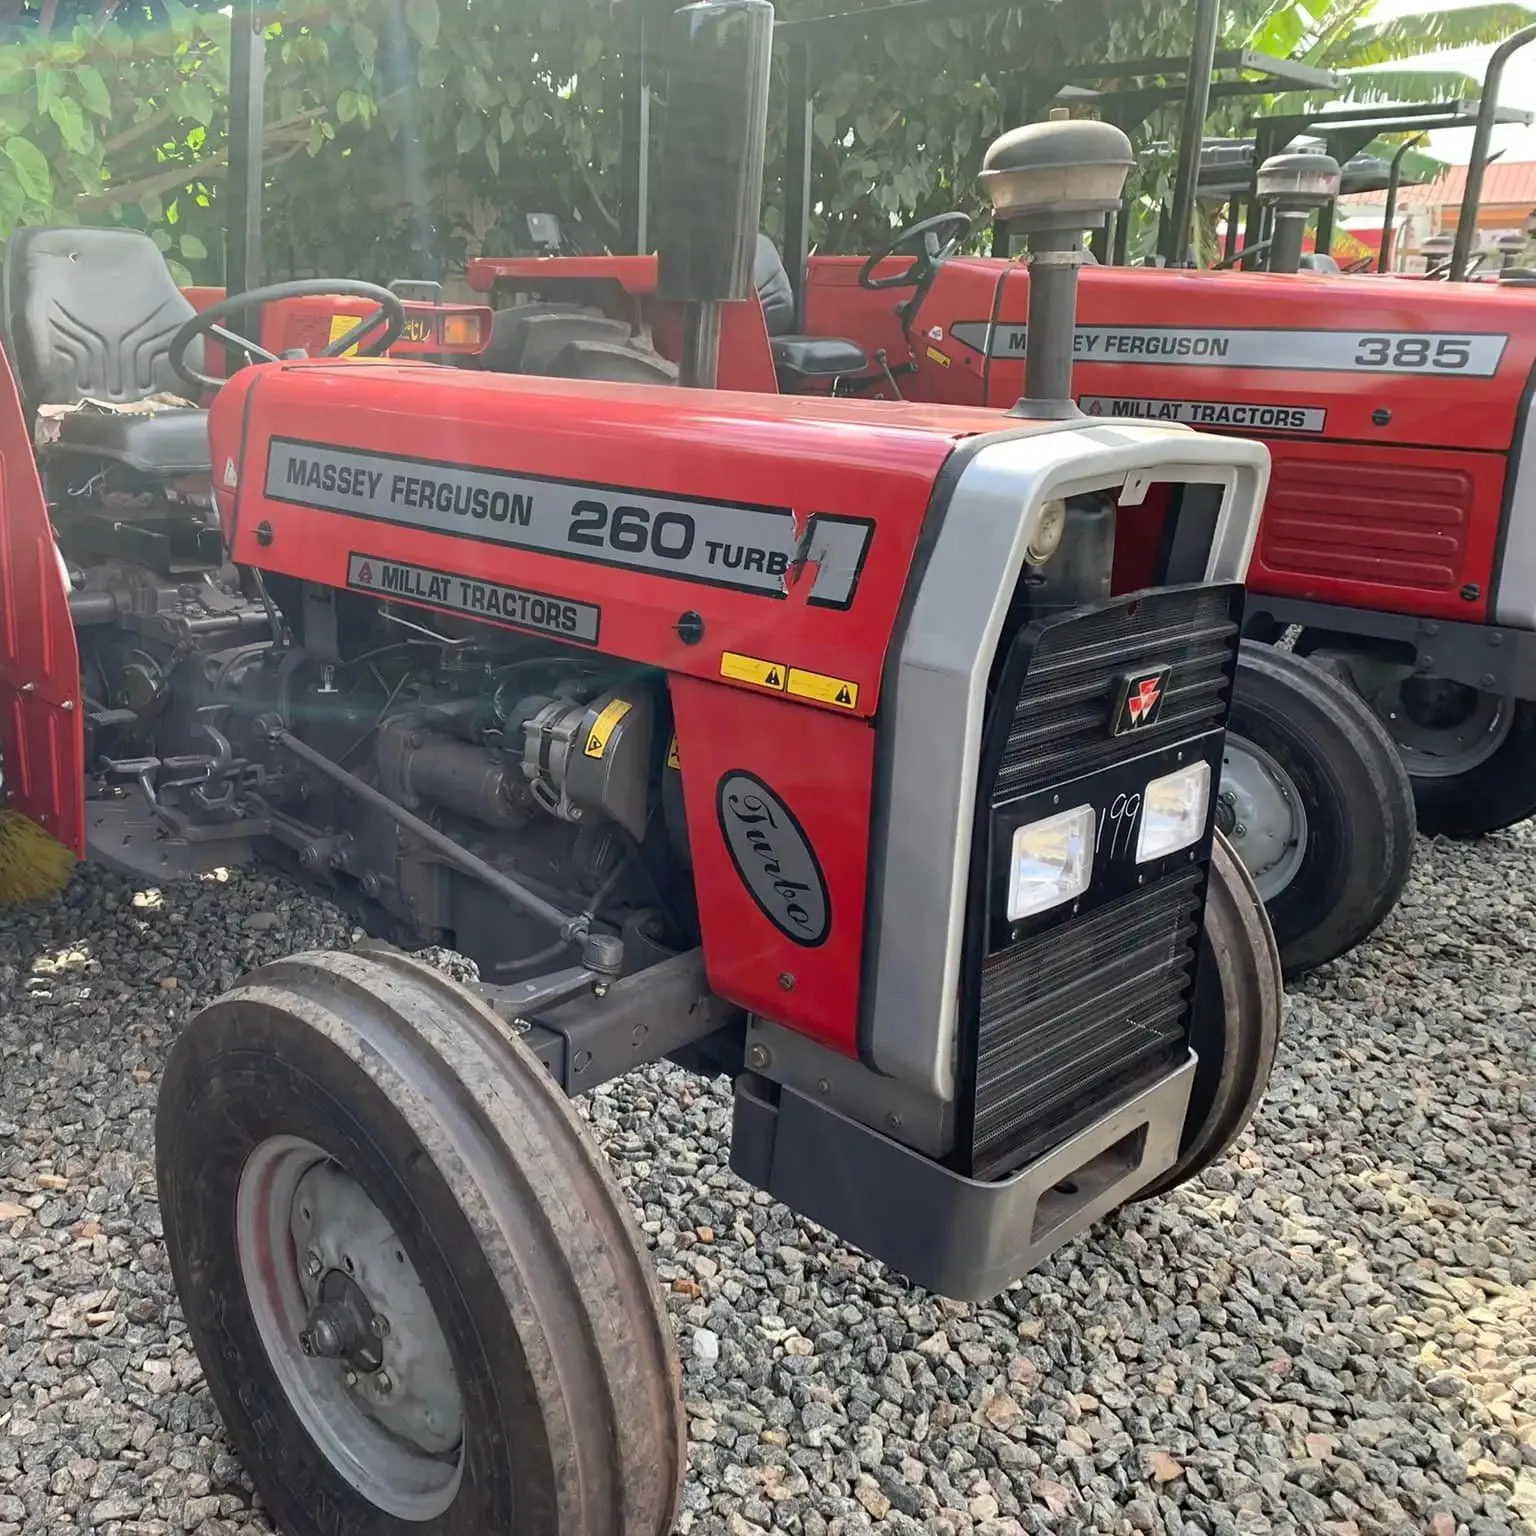 Trattore agricolo Extra trattore Massey Ferguson